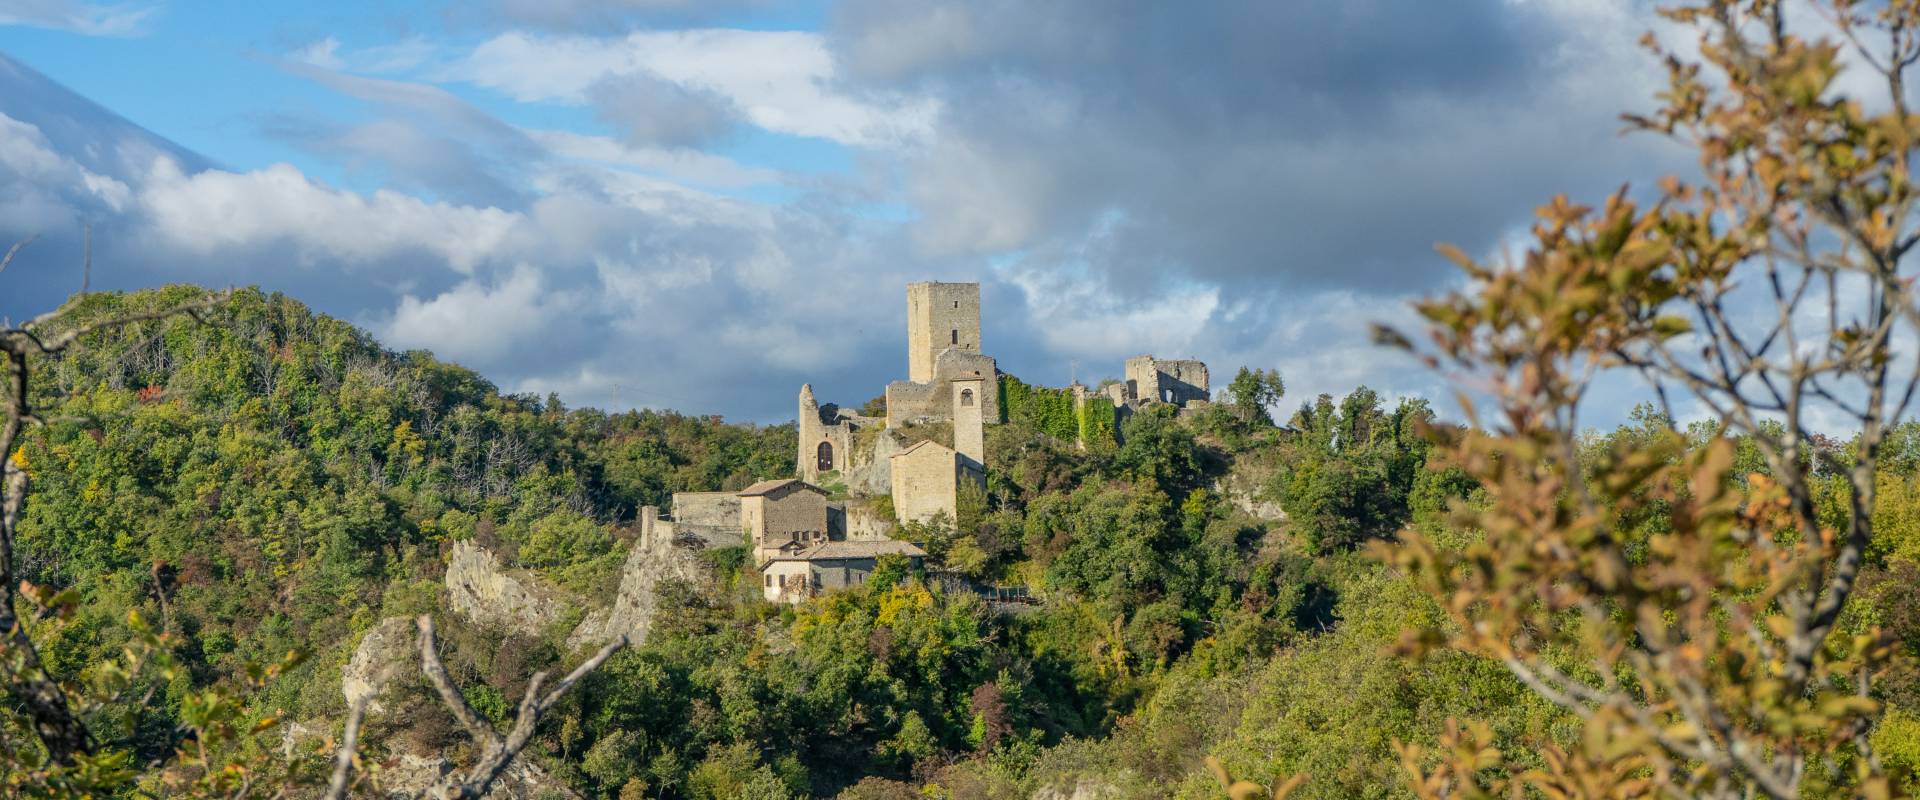 Castello di Carpineti foto di Martina Santamaria @pimpmytripit